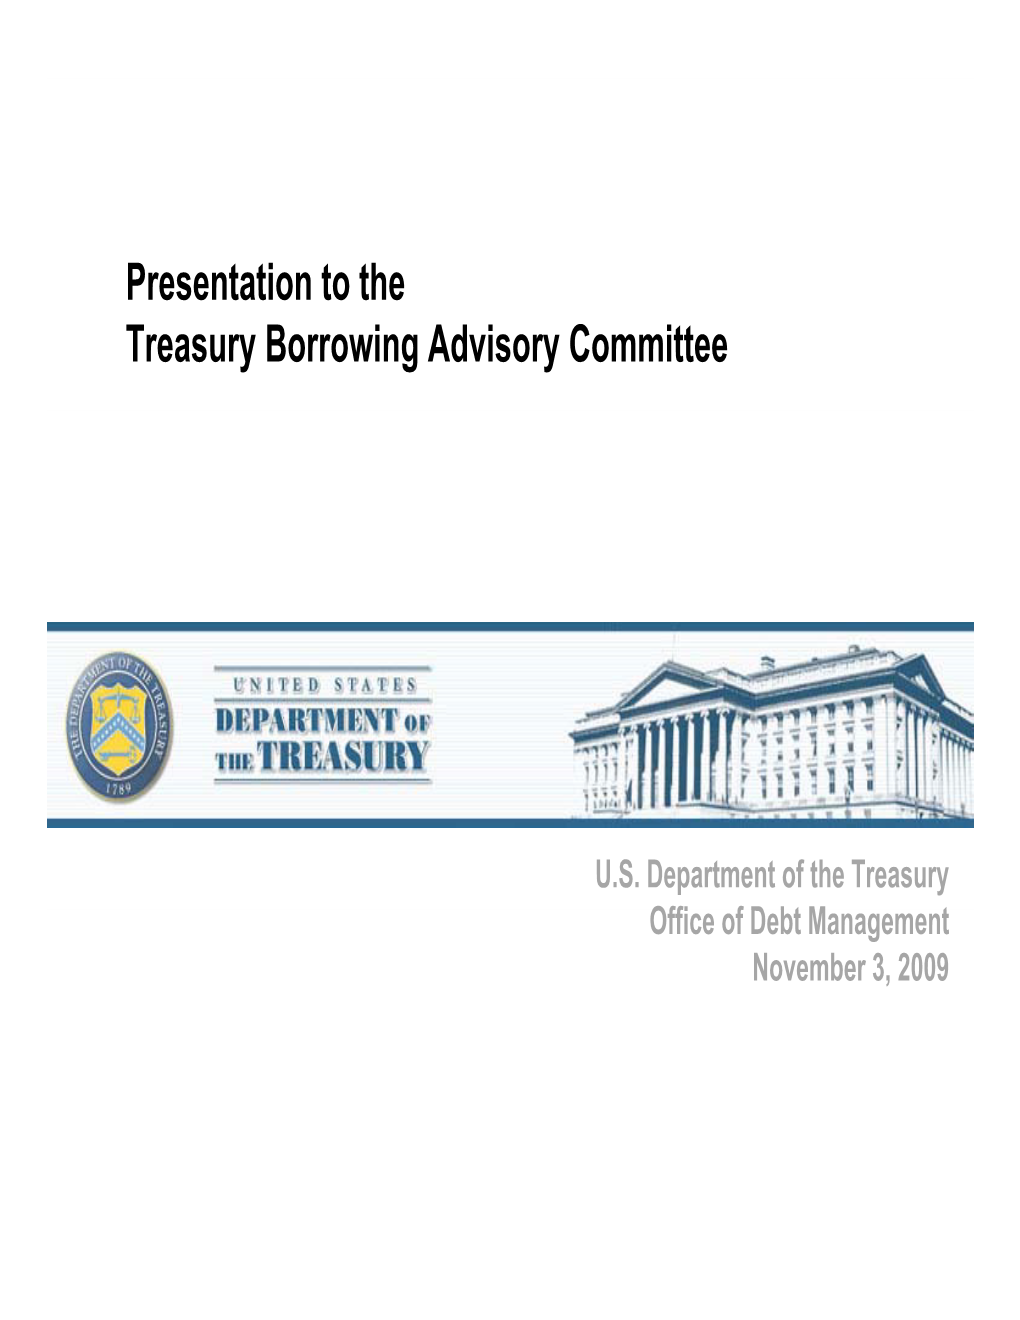 Presentation to the Treasury Borrowing Advisory Committee